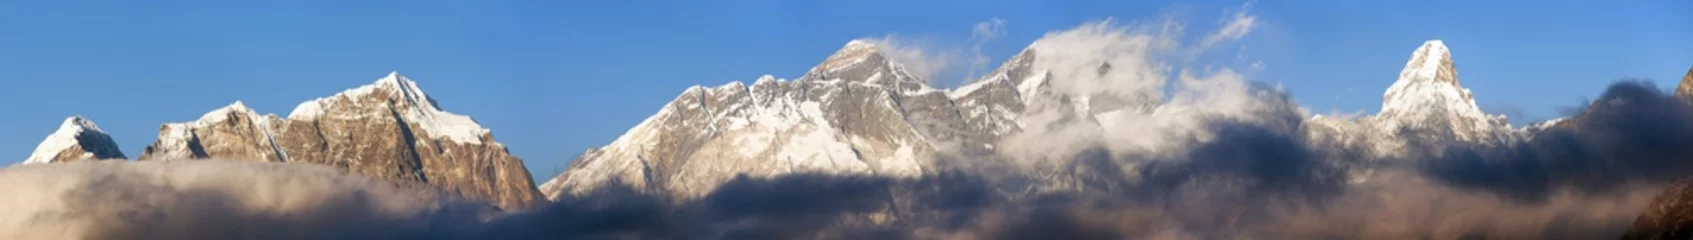 Papier Peint photo Ama Dablam mount Everest, Lhotse and Ama Dablam panorama